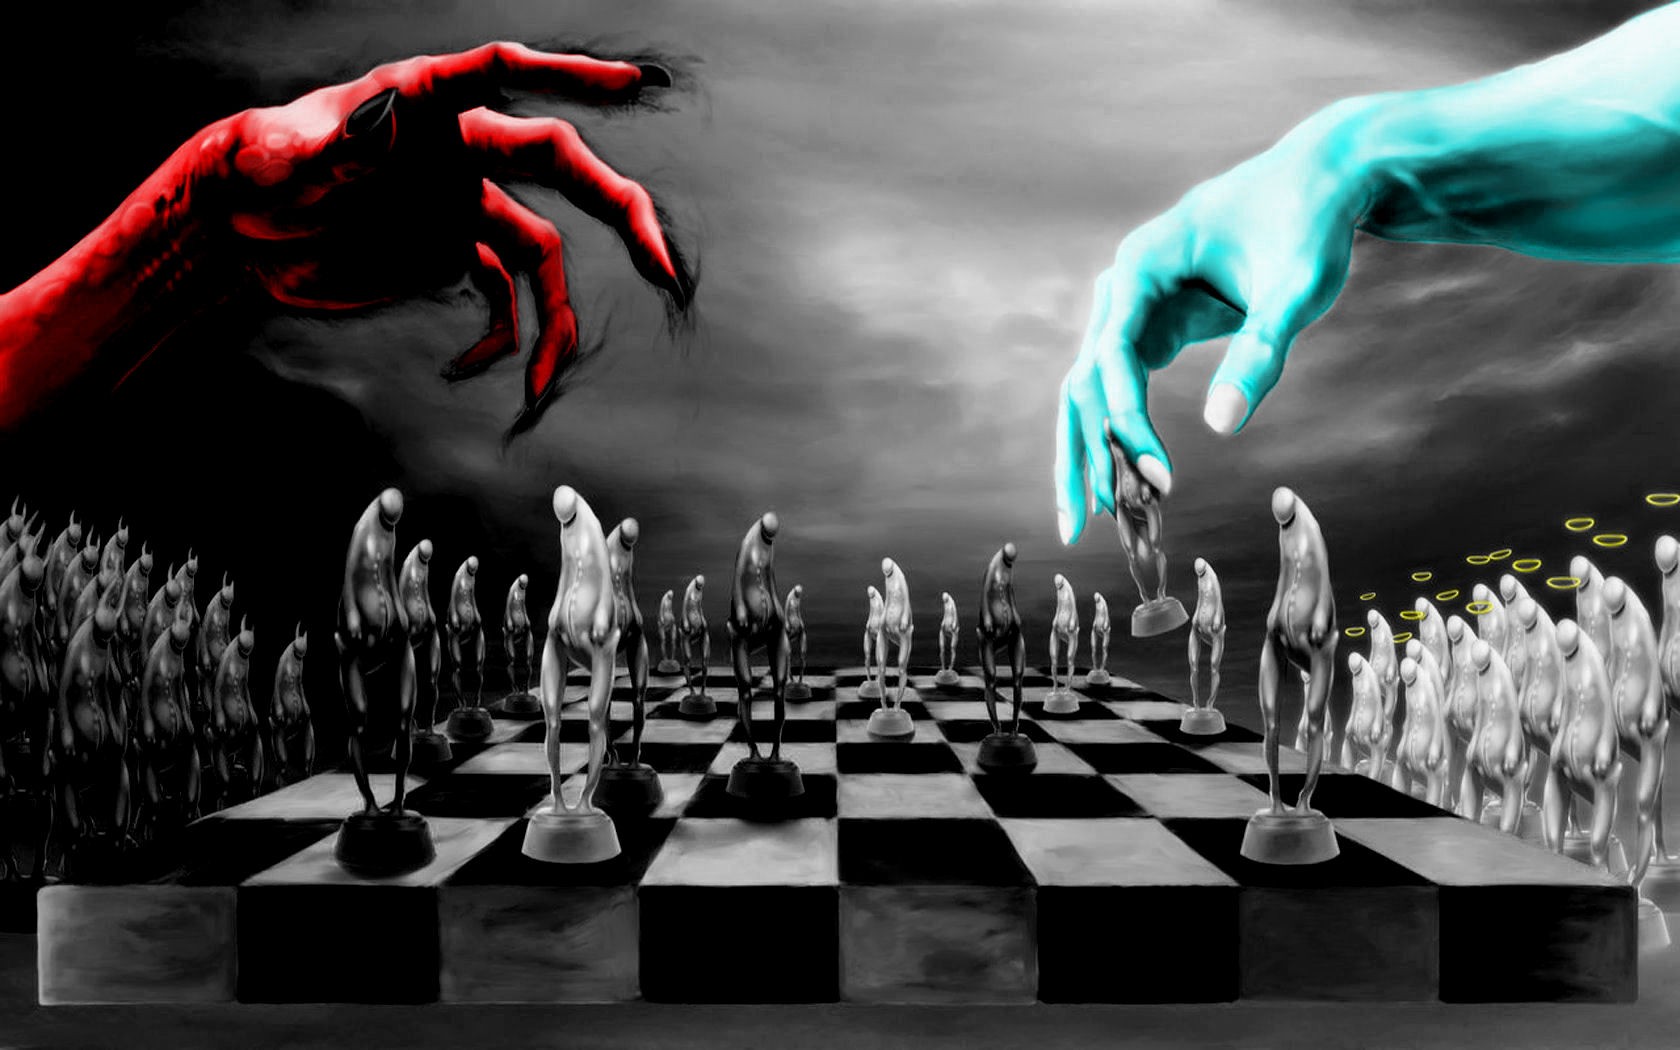 General 1680x1050 chess devil God digital art hands selective coloring red cyan board games